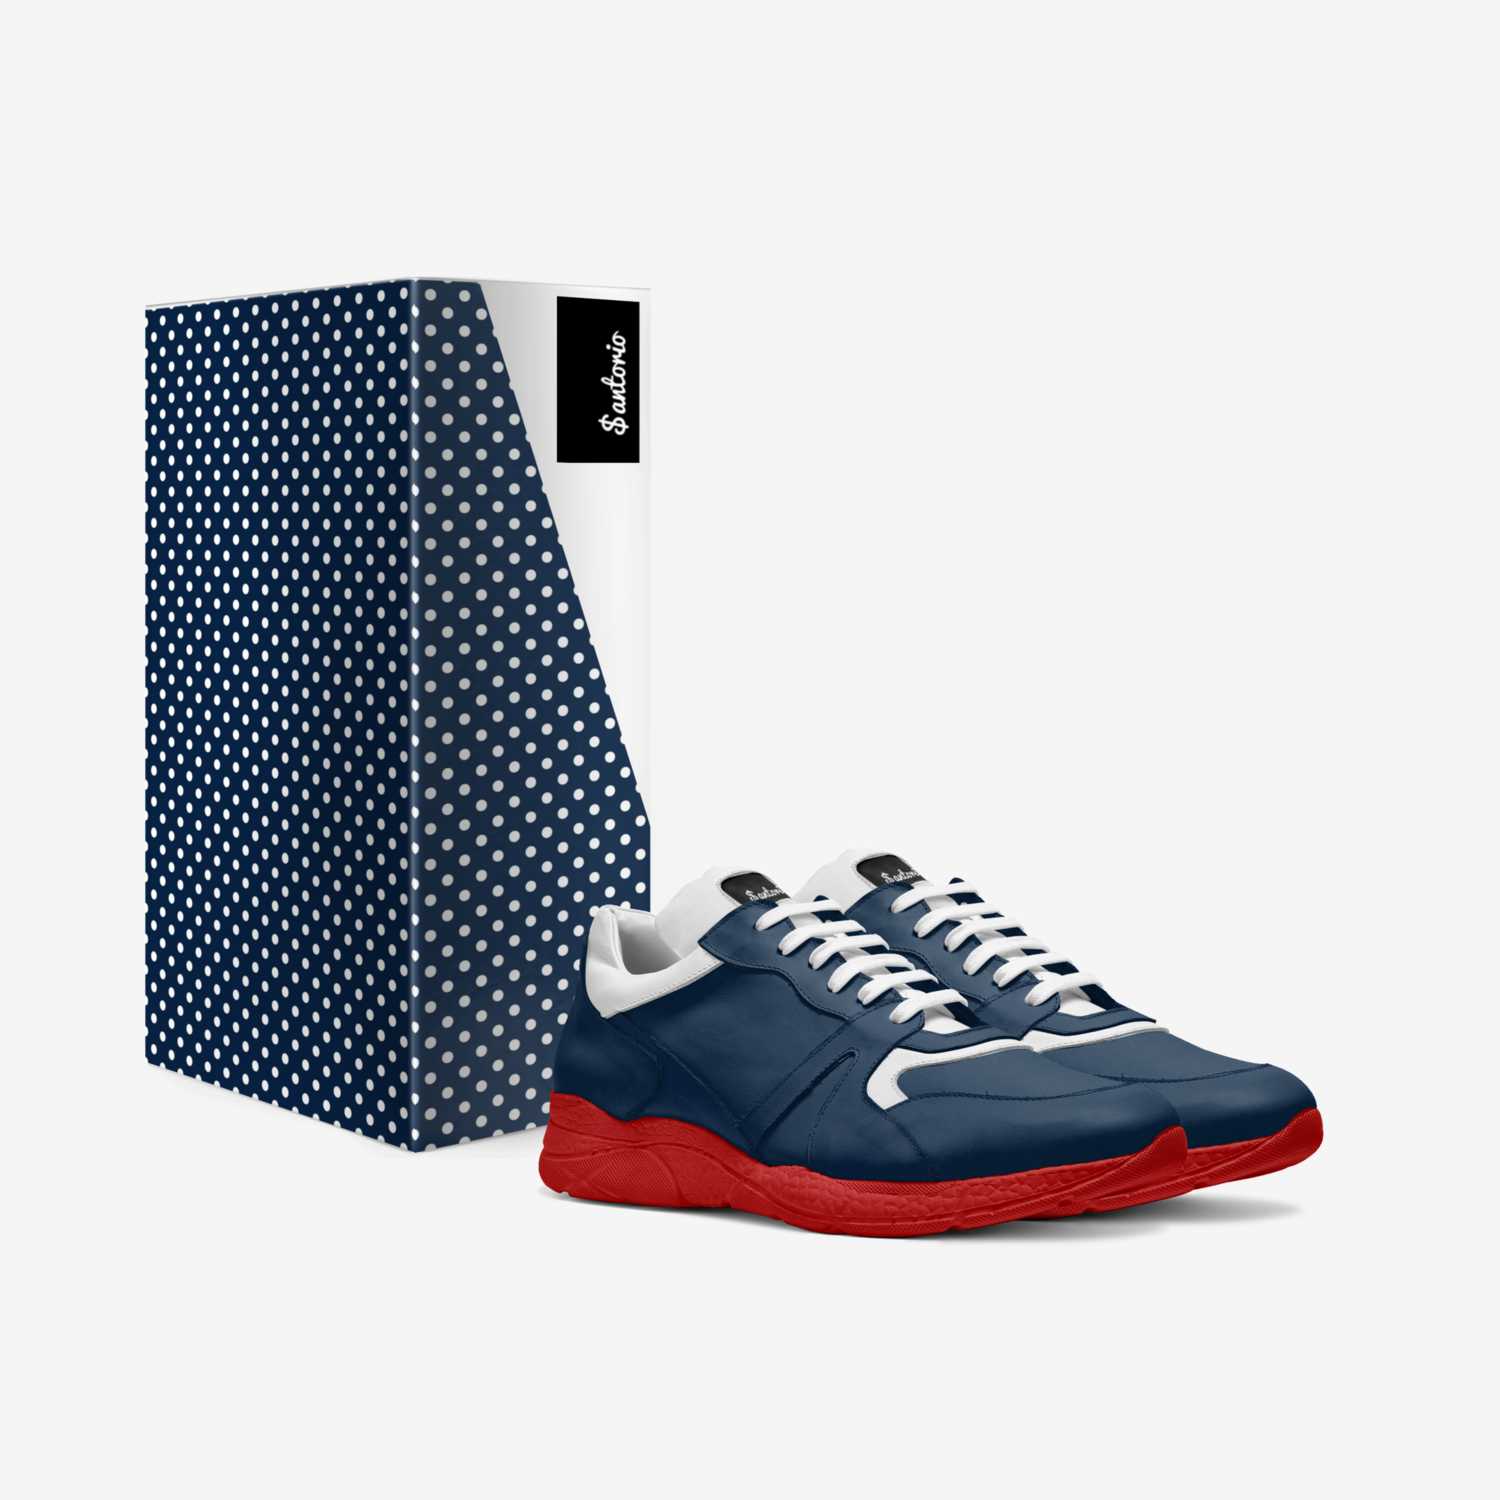 Santorio Carter custom made in Italy shoes by Santorio Carter | Box view